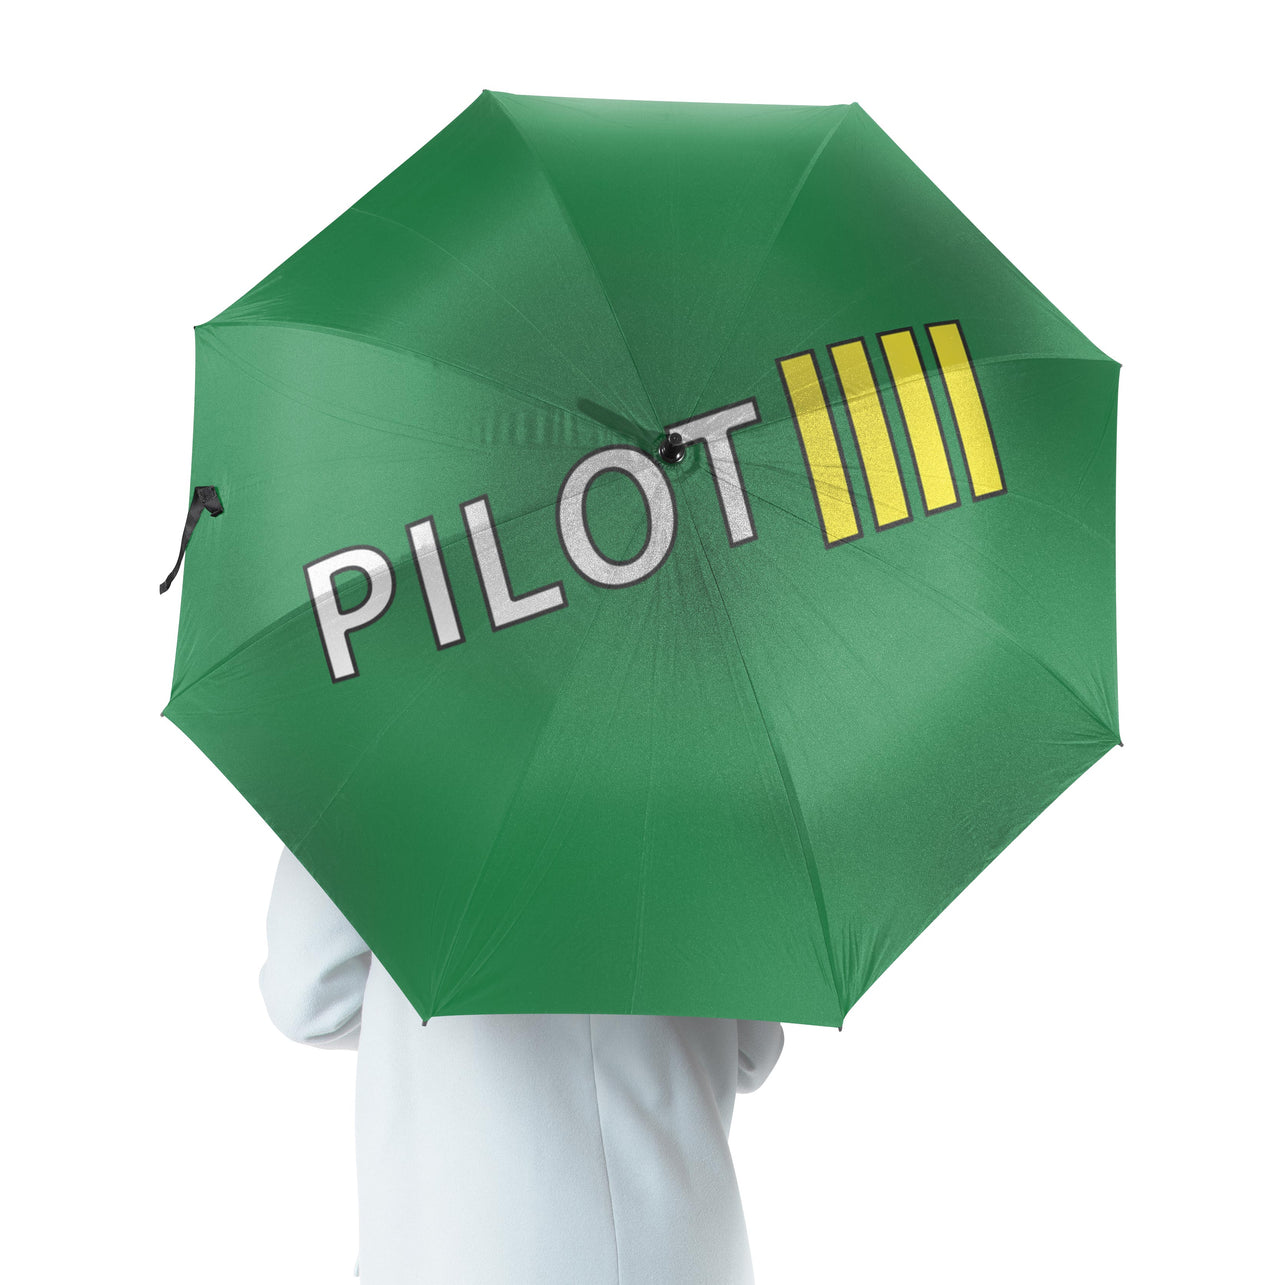 Pilot & Stripes (4 Lines) Designed Umbrella